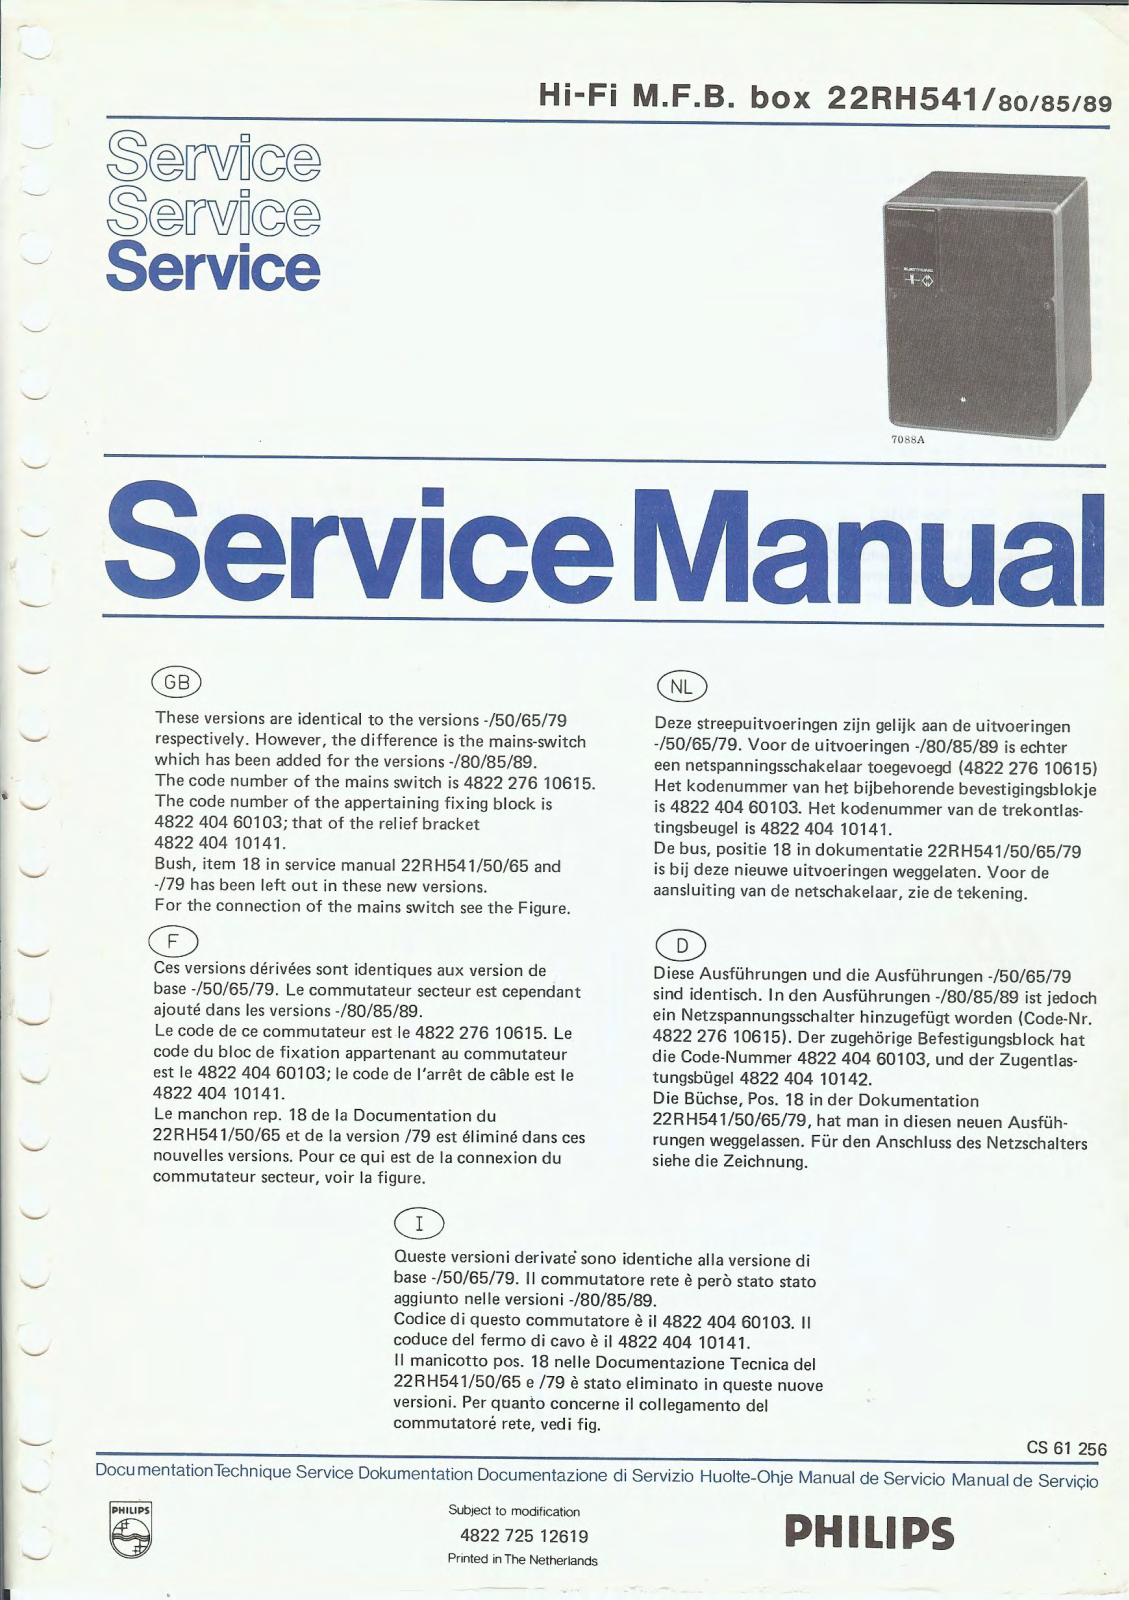 Philips 22-RH-541 Service Manual